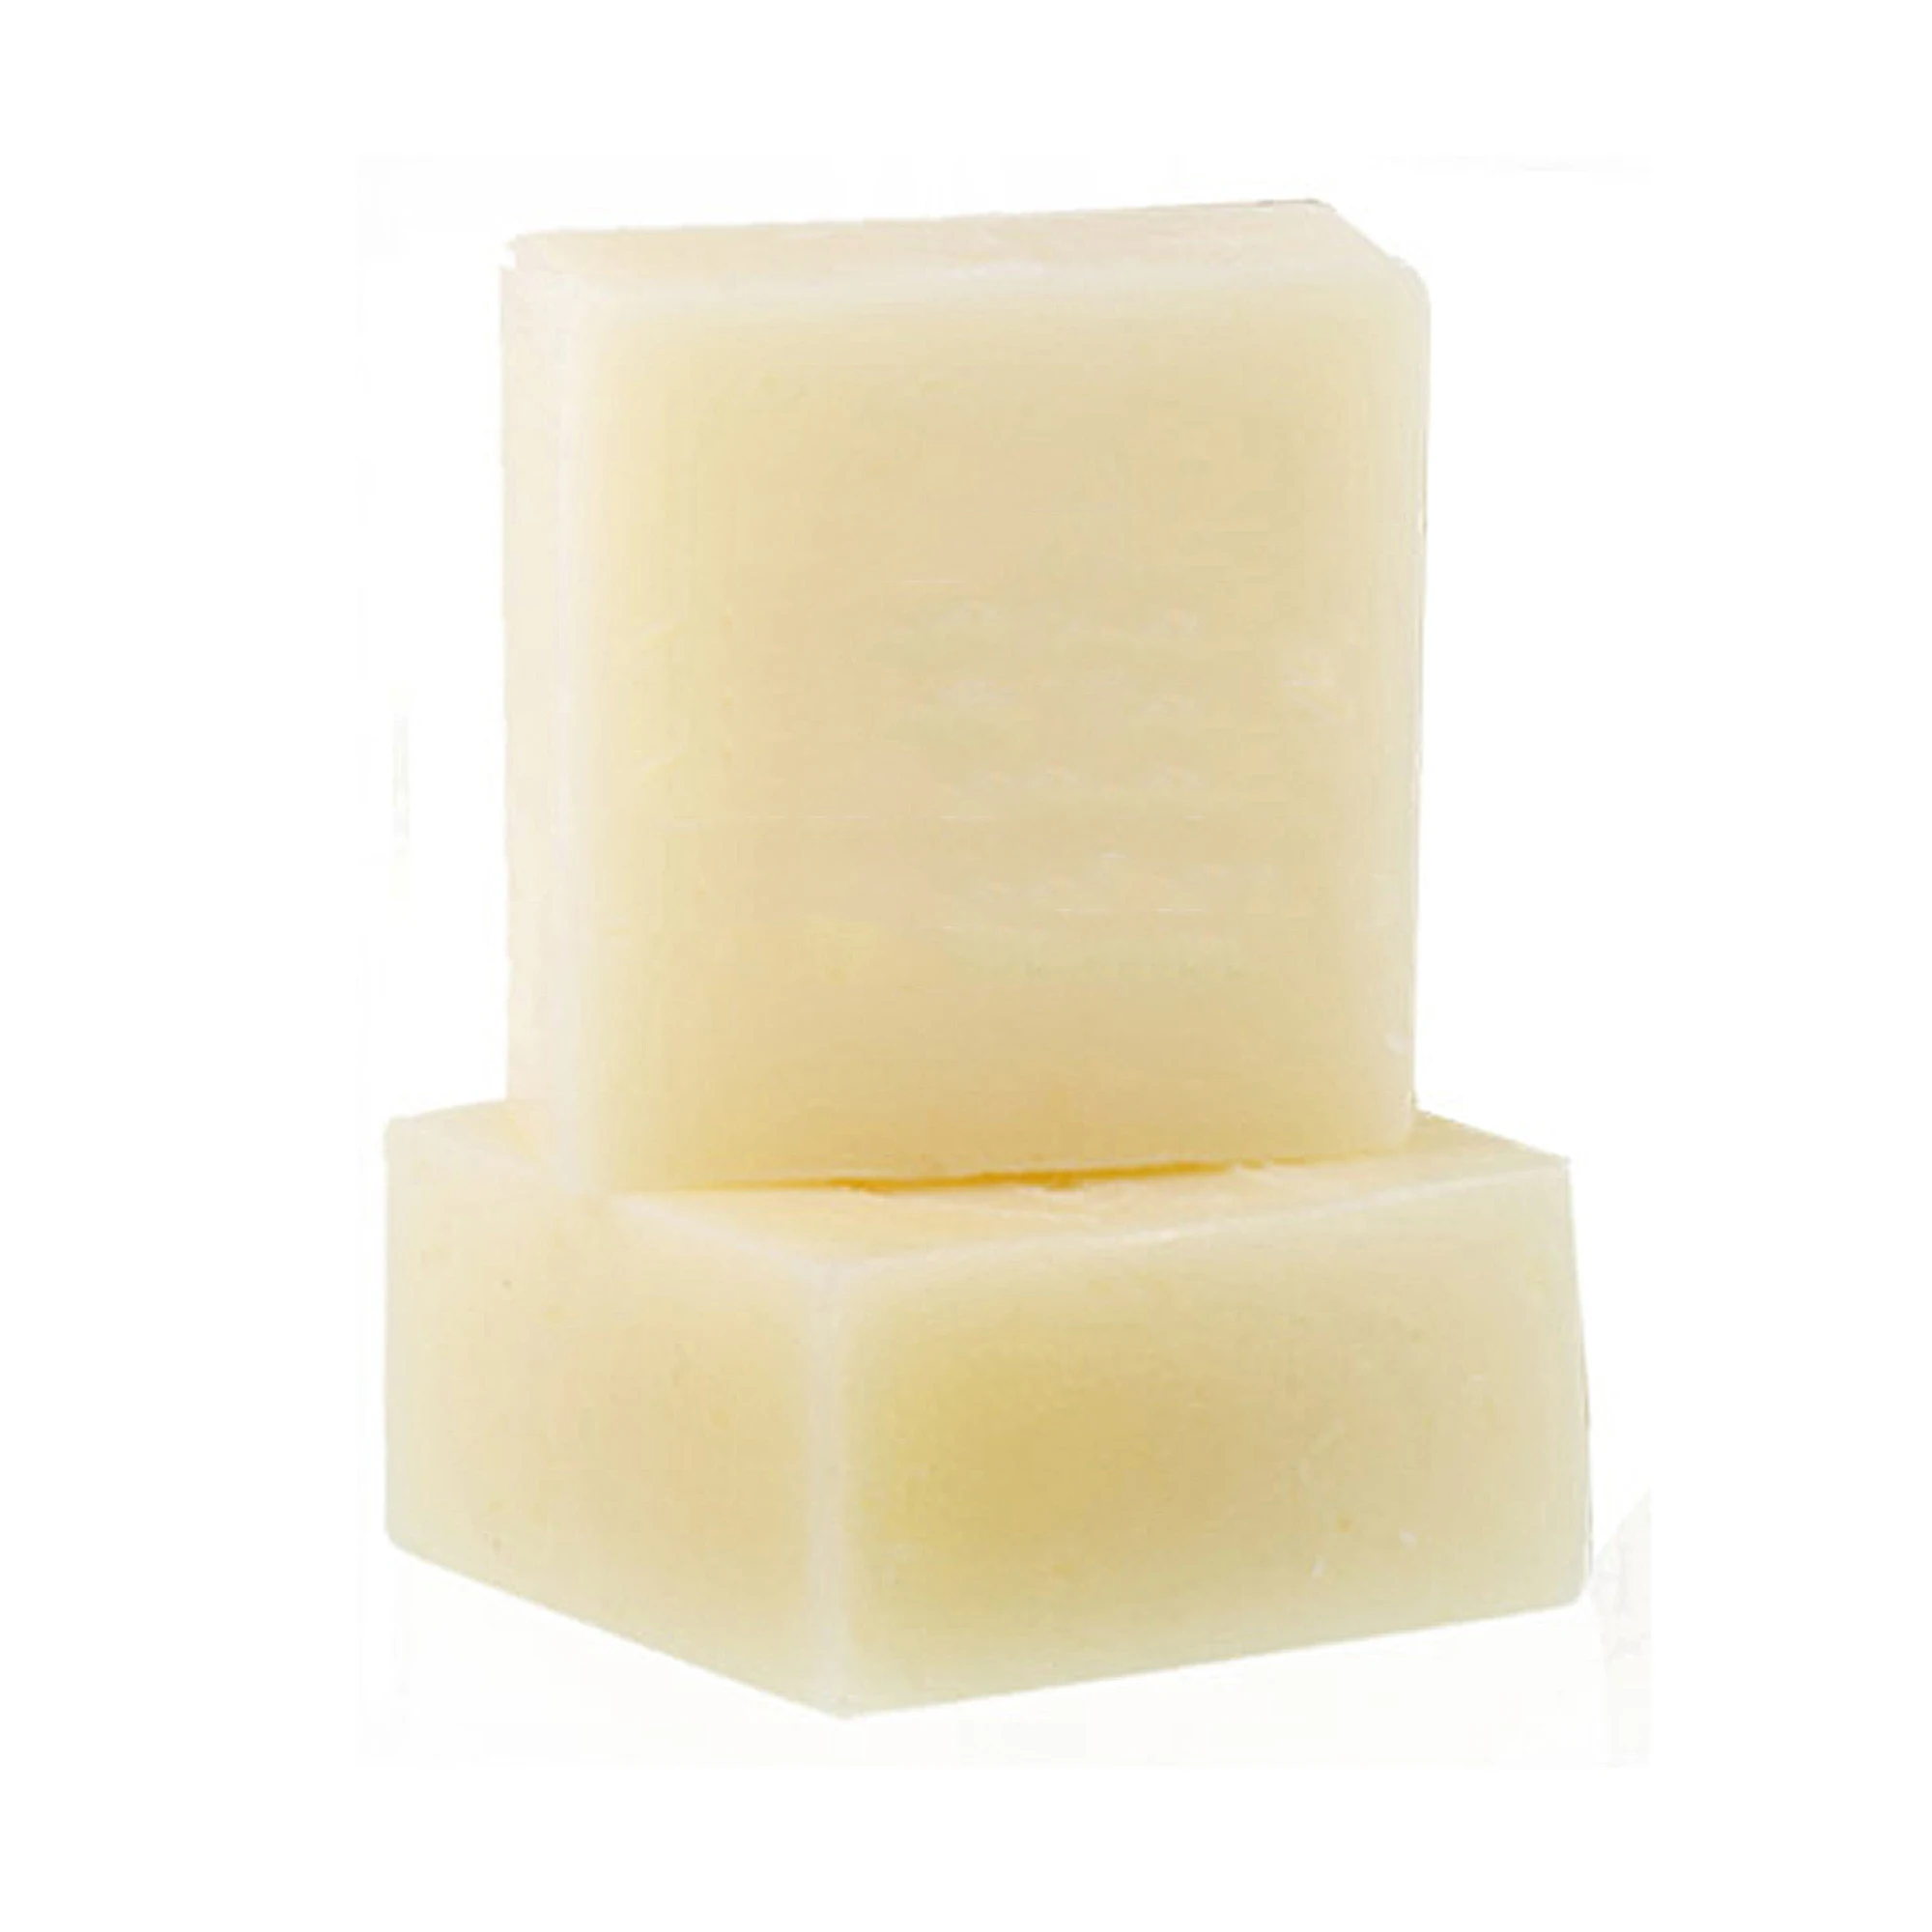 Private label custom natural soap whitening handmade soap Goat Milk Soap